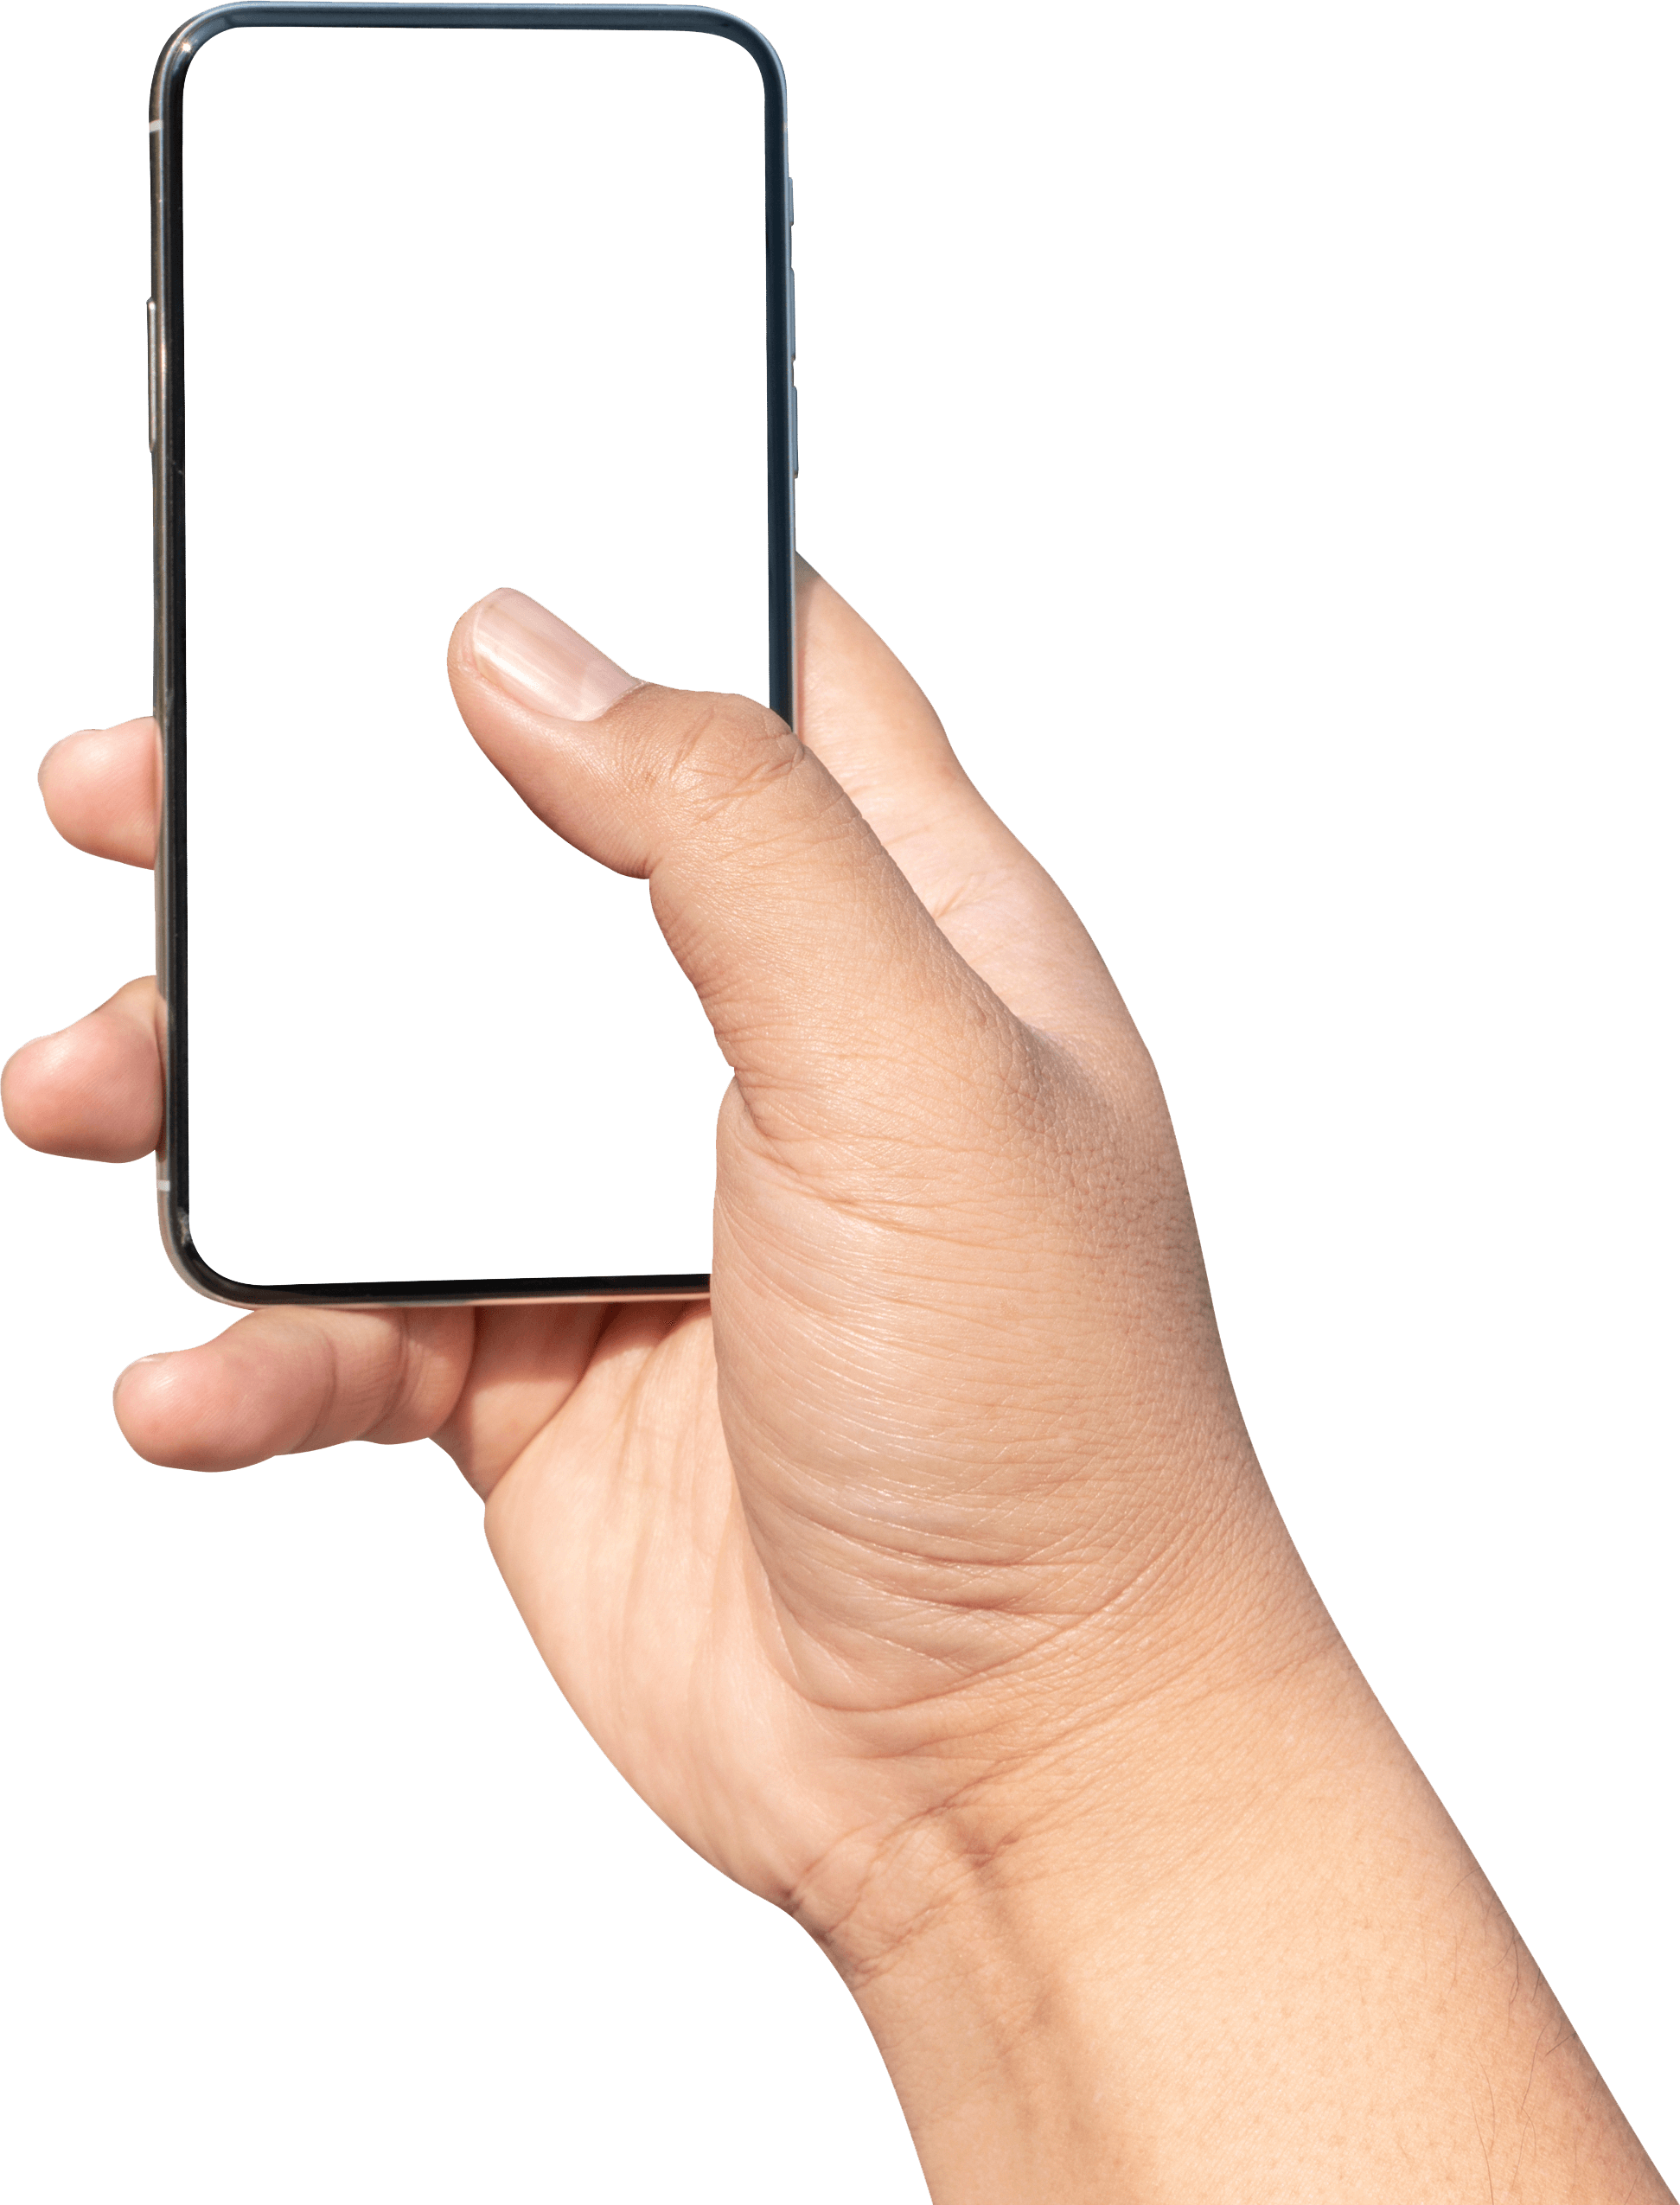 Platform Images - Hand holding phone